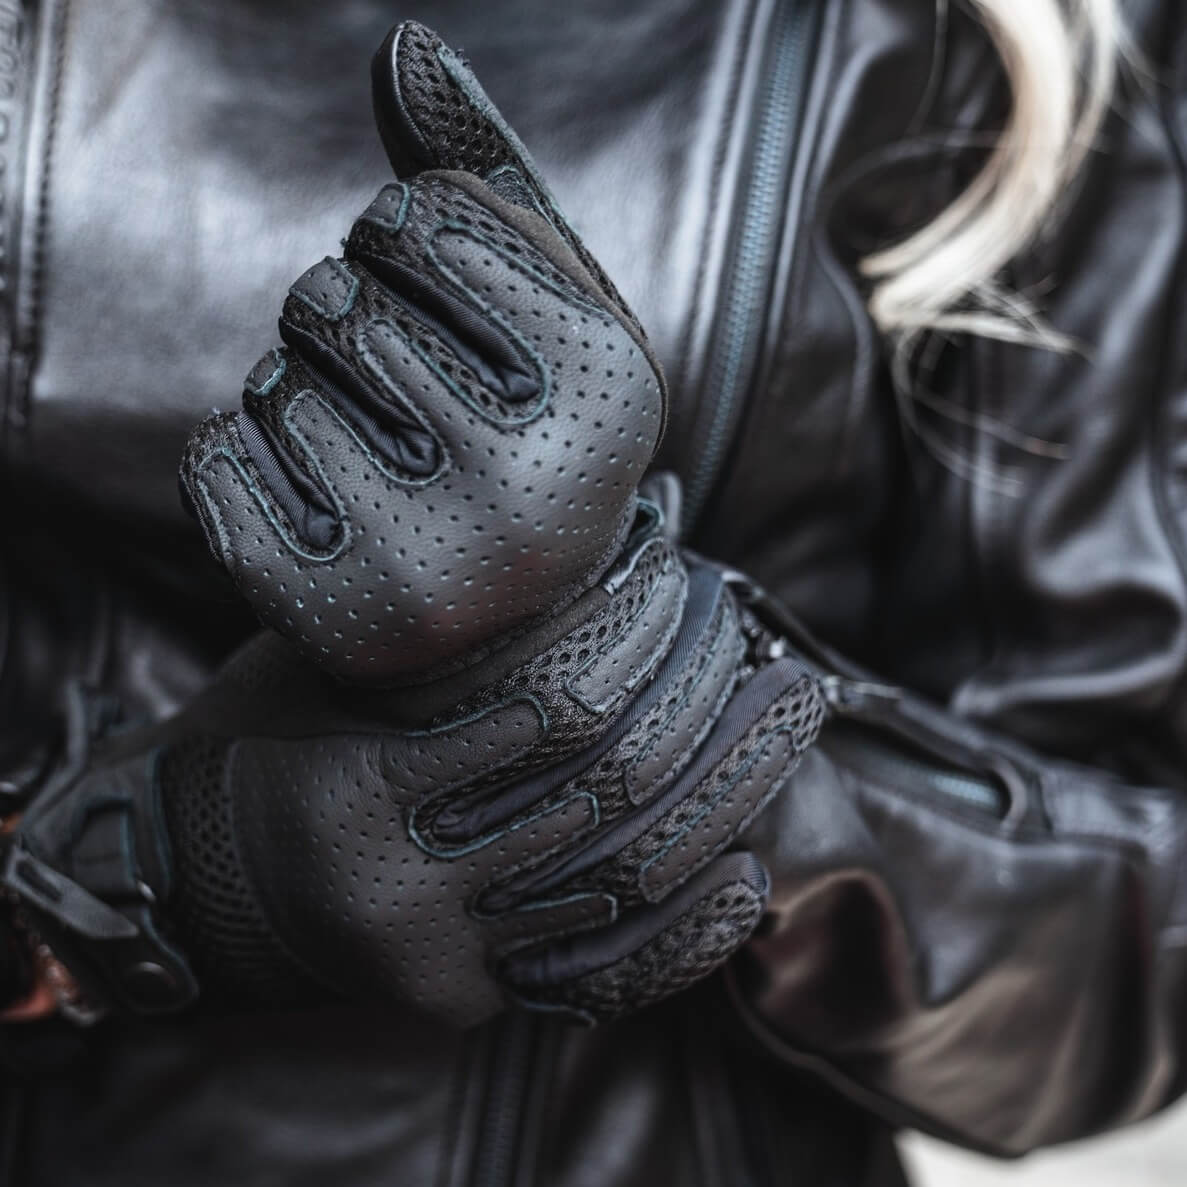 MotoGirl | Summer Gloves - CLEARANCE